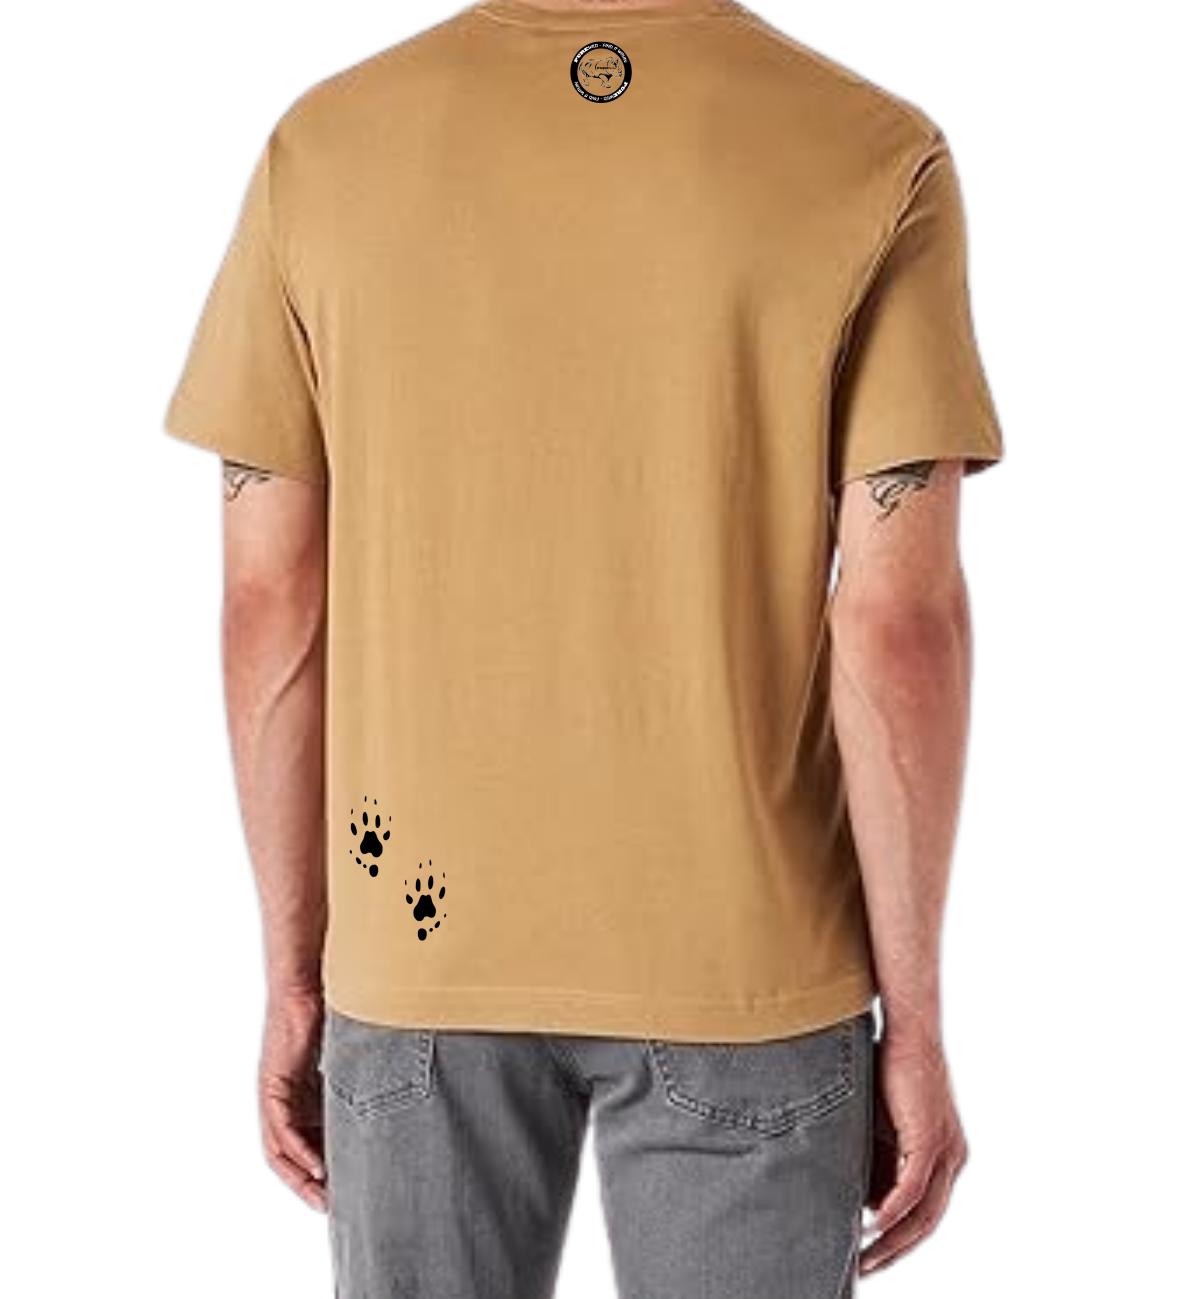 Meerkat T-Shirt For A Real Man